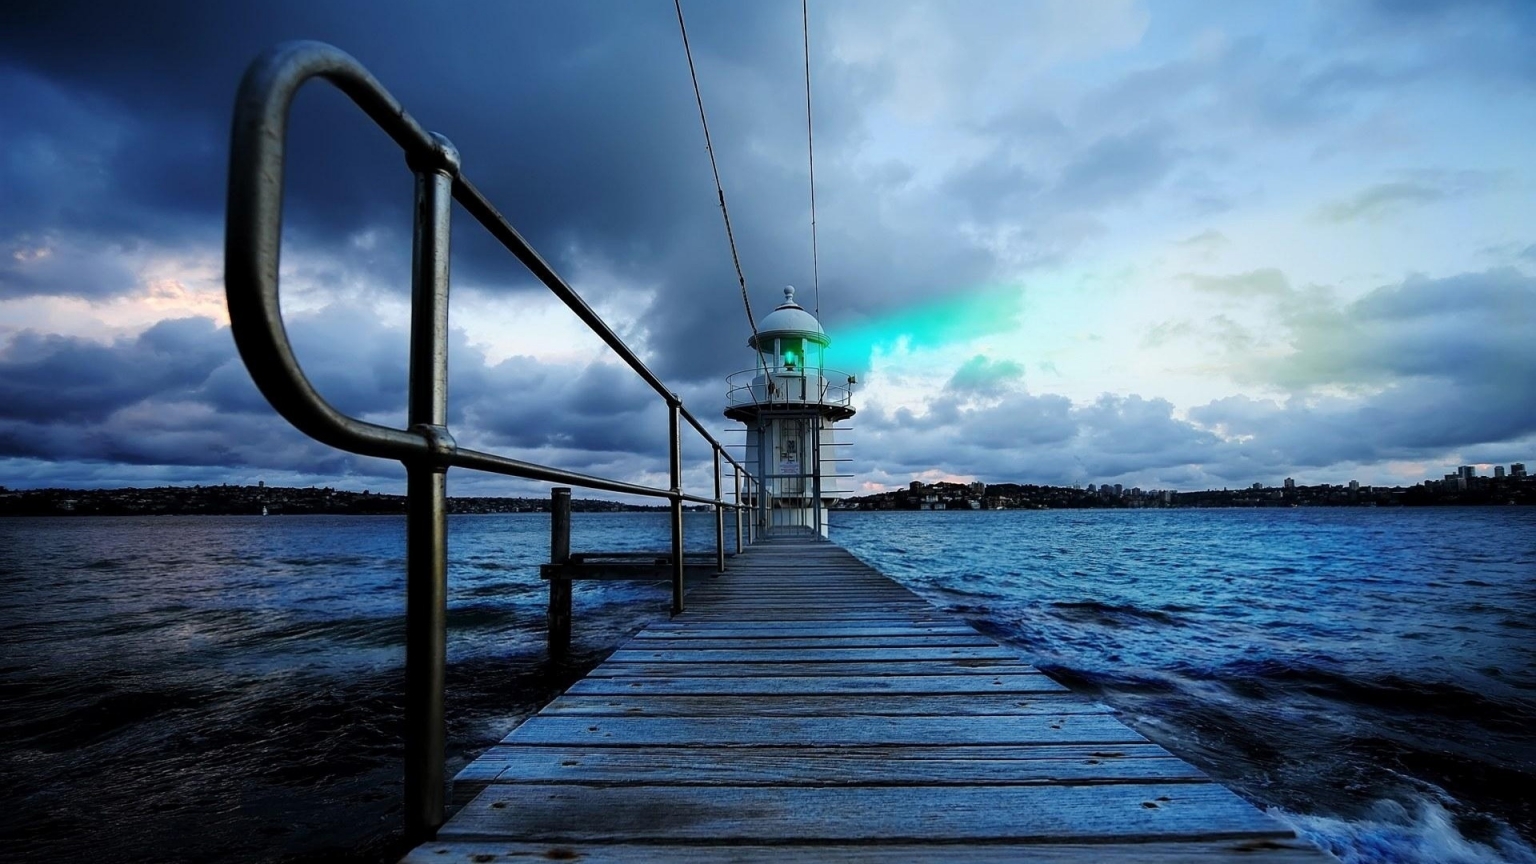 Lighthouse in Sydney for 1536 x 864 HDTV resolution